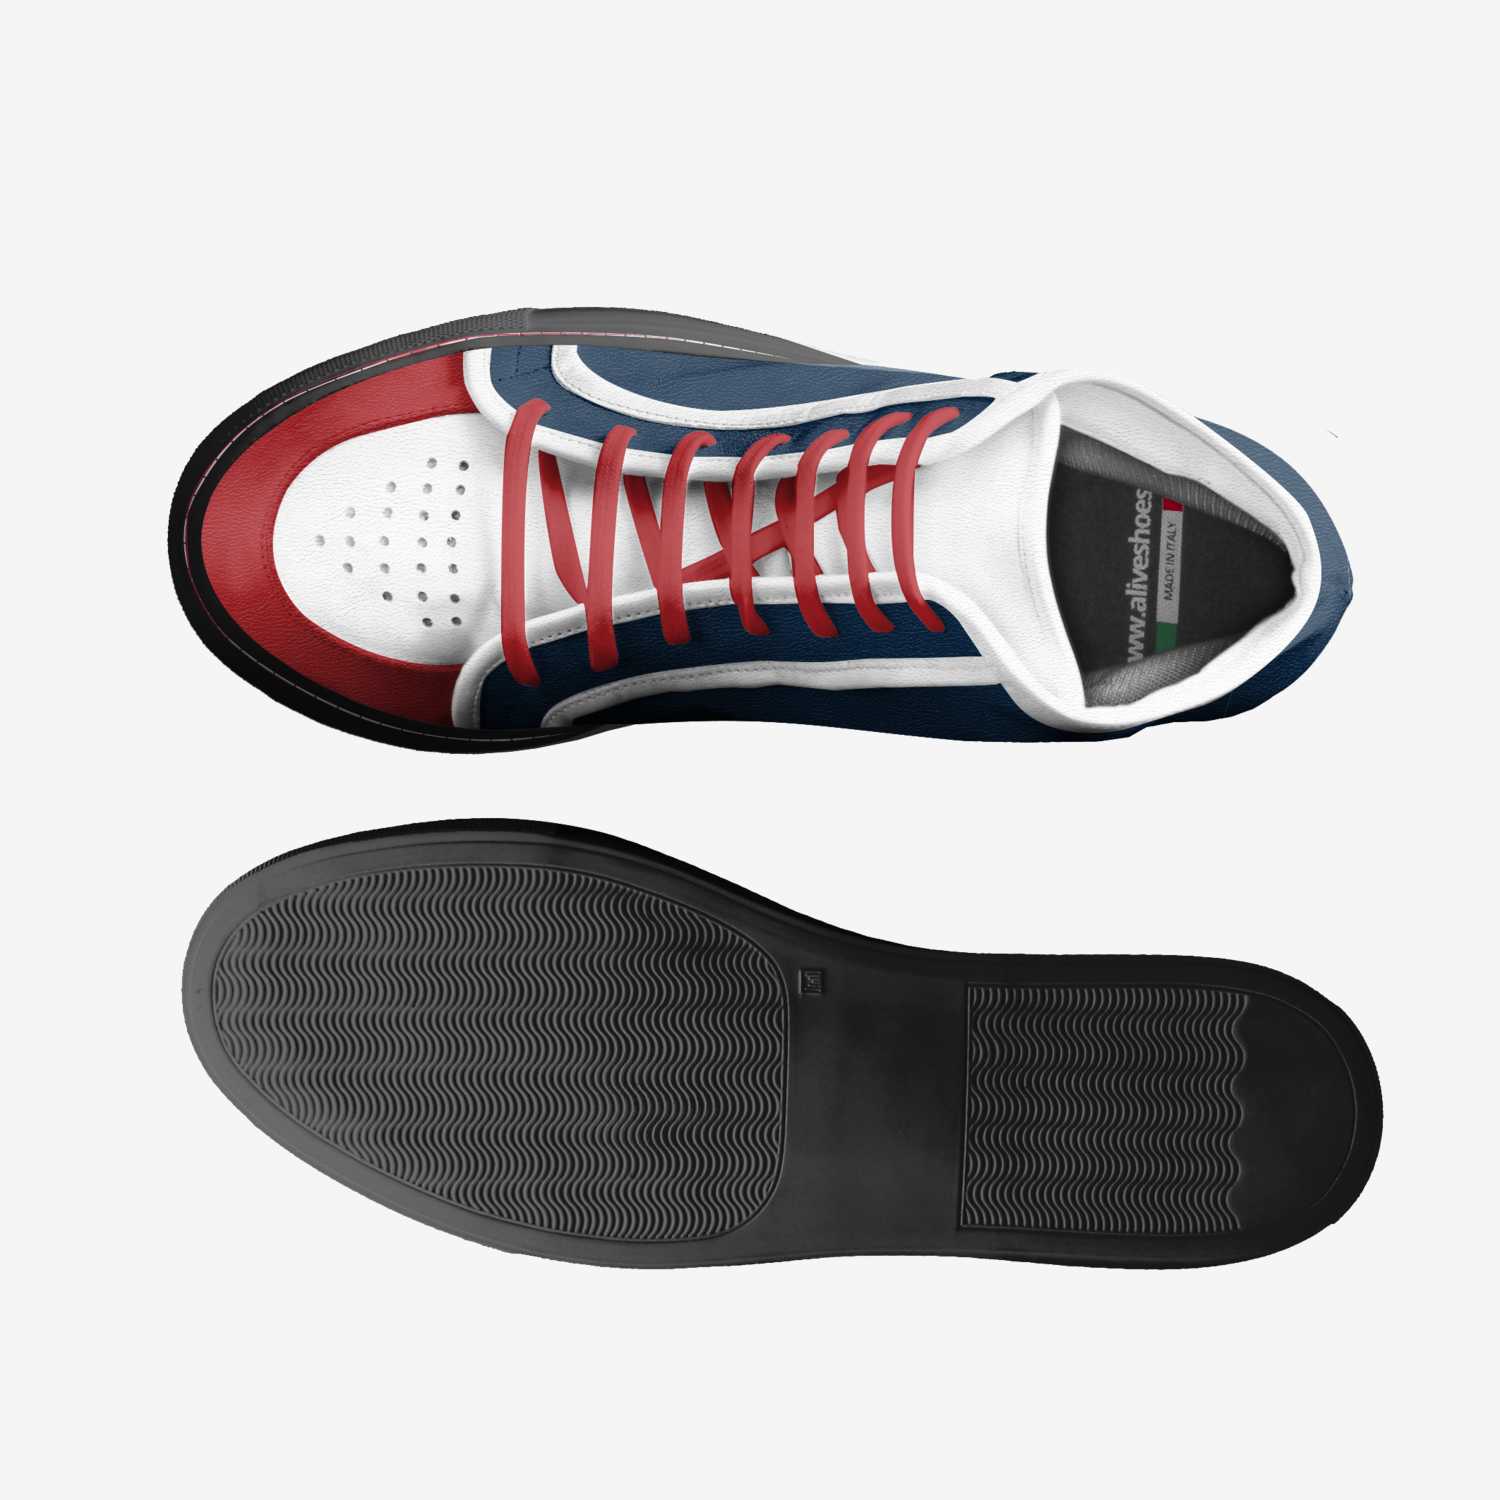 John Paul | A Custom Shoe concept by John Nolan